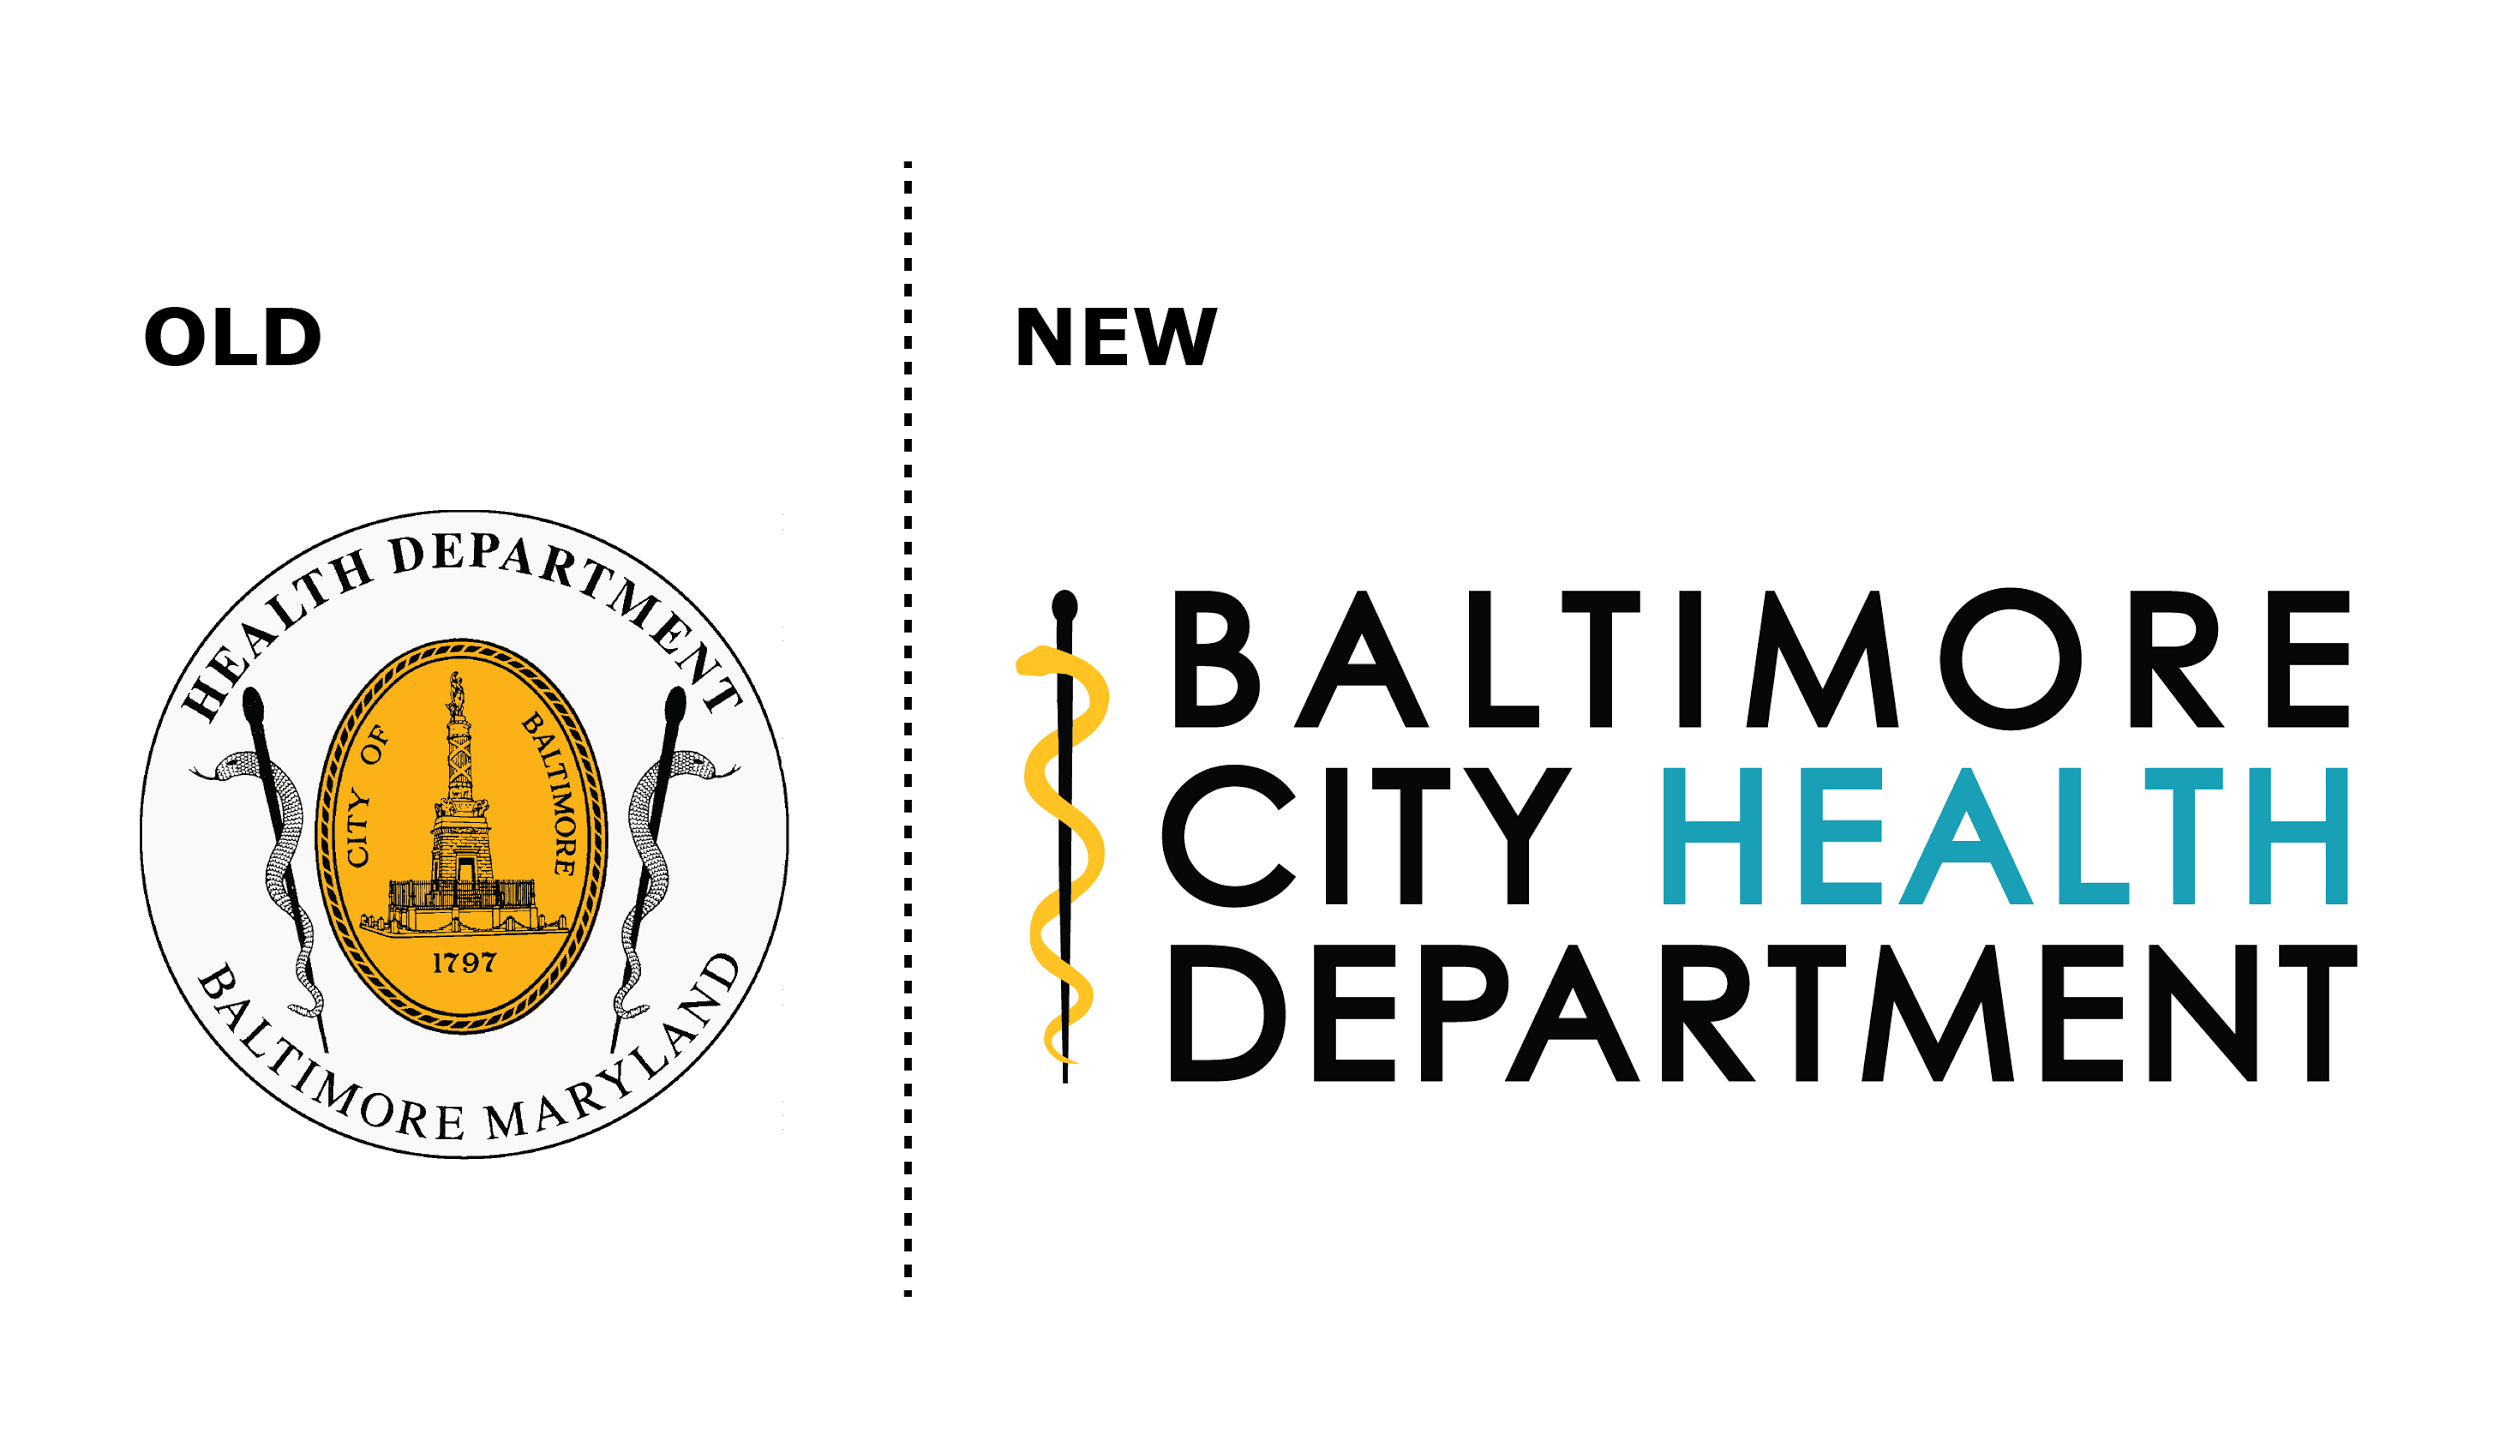 Baltimore City Health Department Old Logo New Logo Comparison Local Government Rebrand